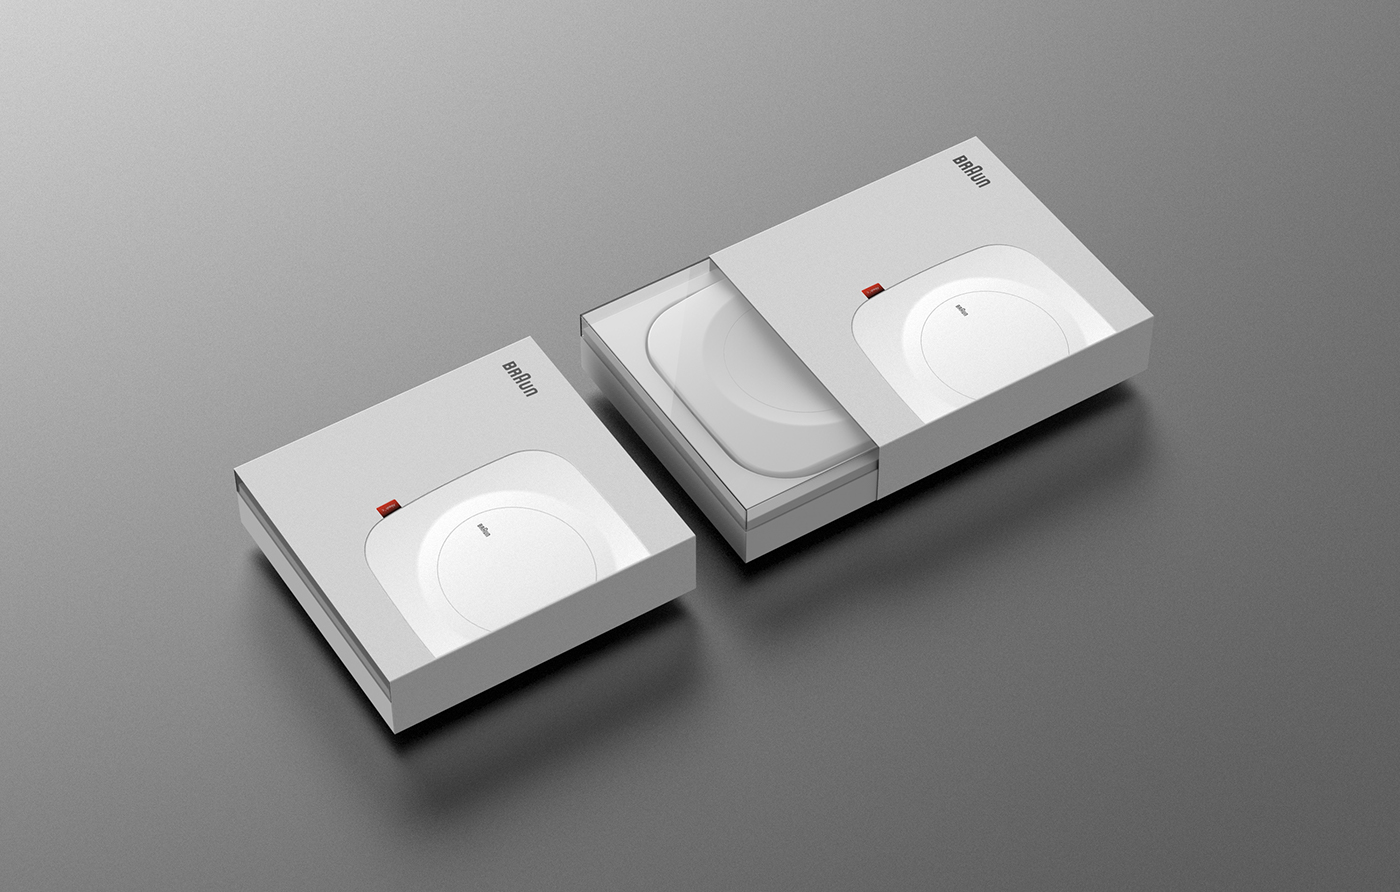 Dehumidifier air braun air cleaner bathroom UI interaction healthcare care product